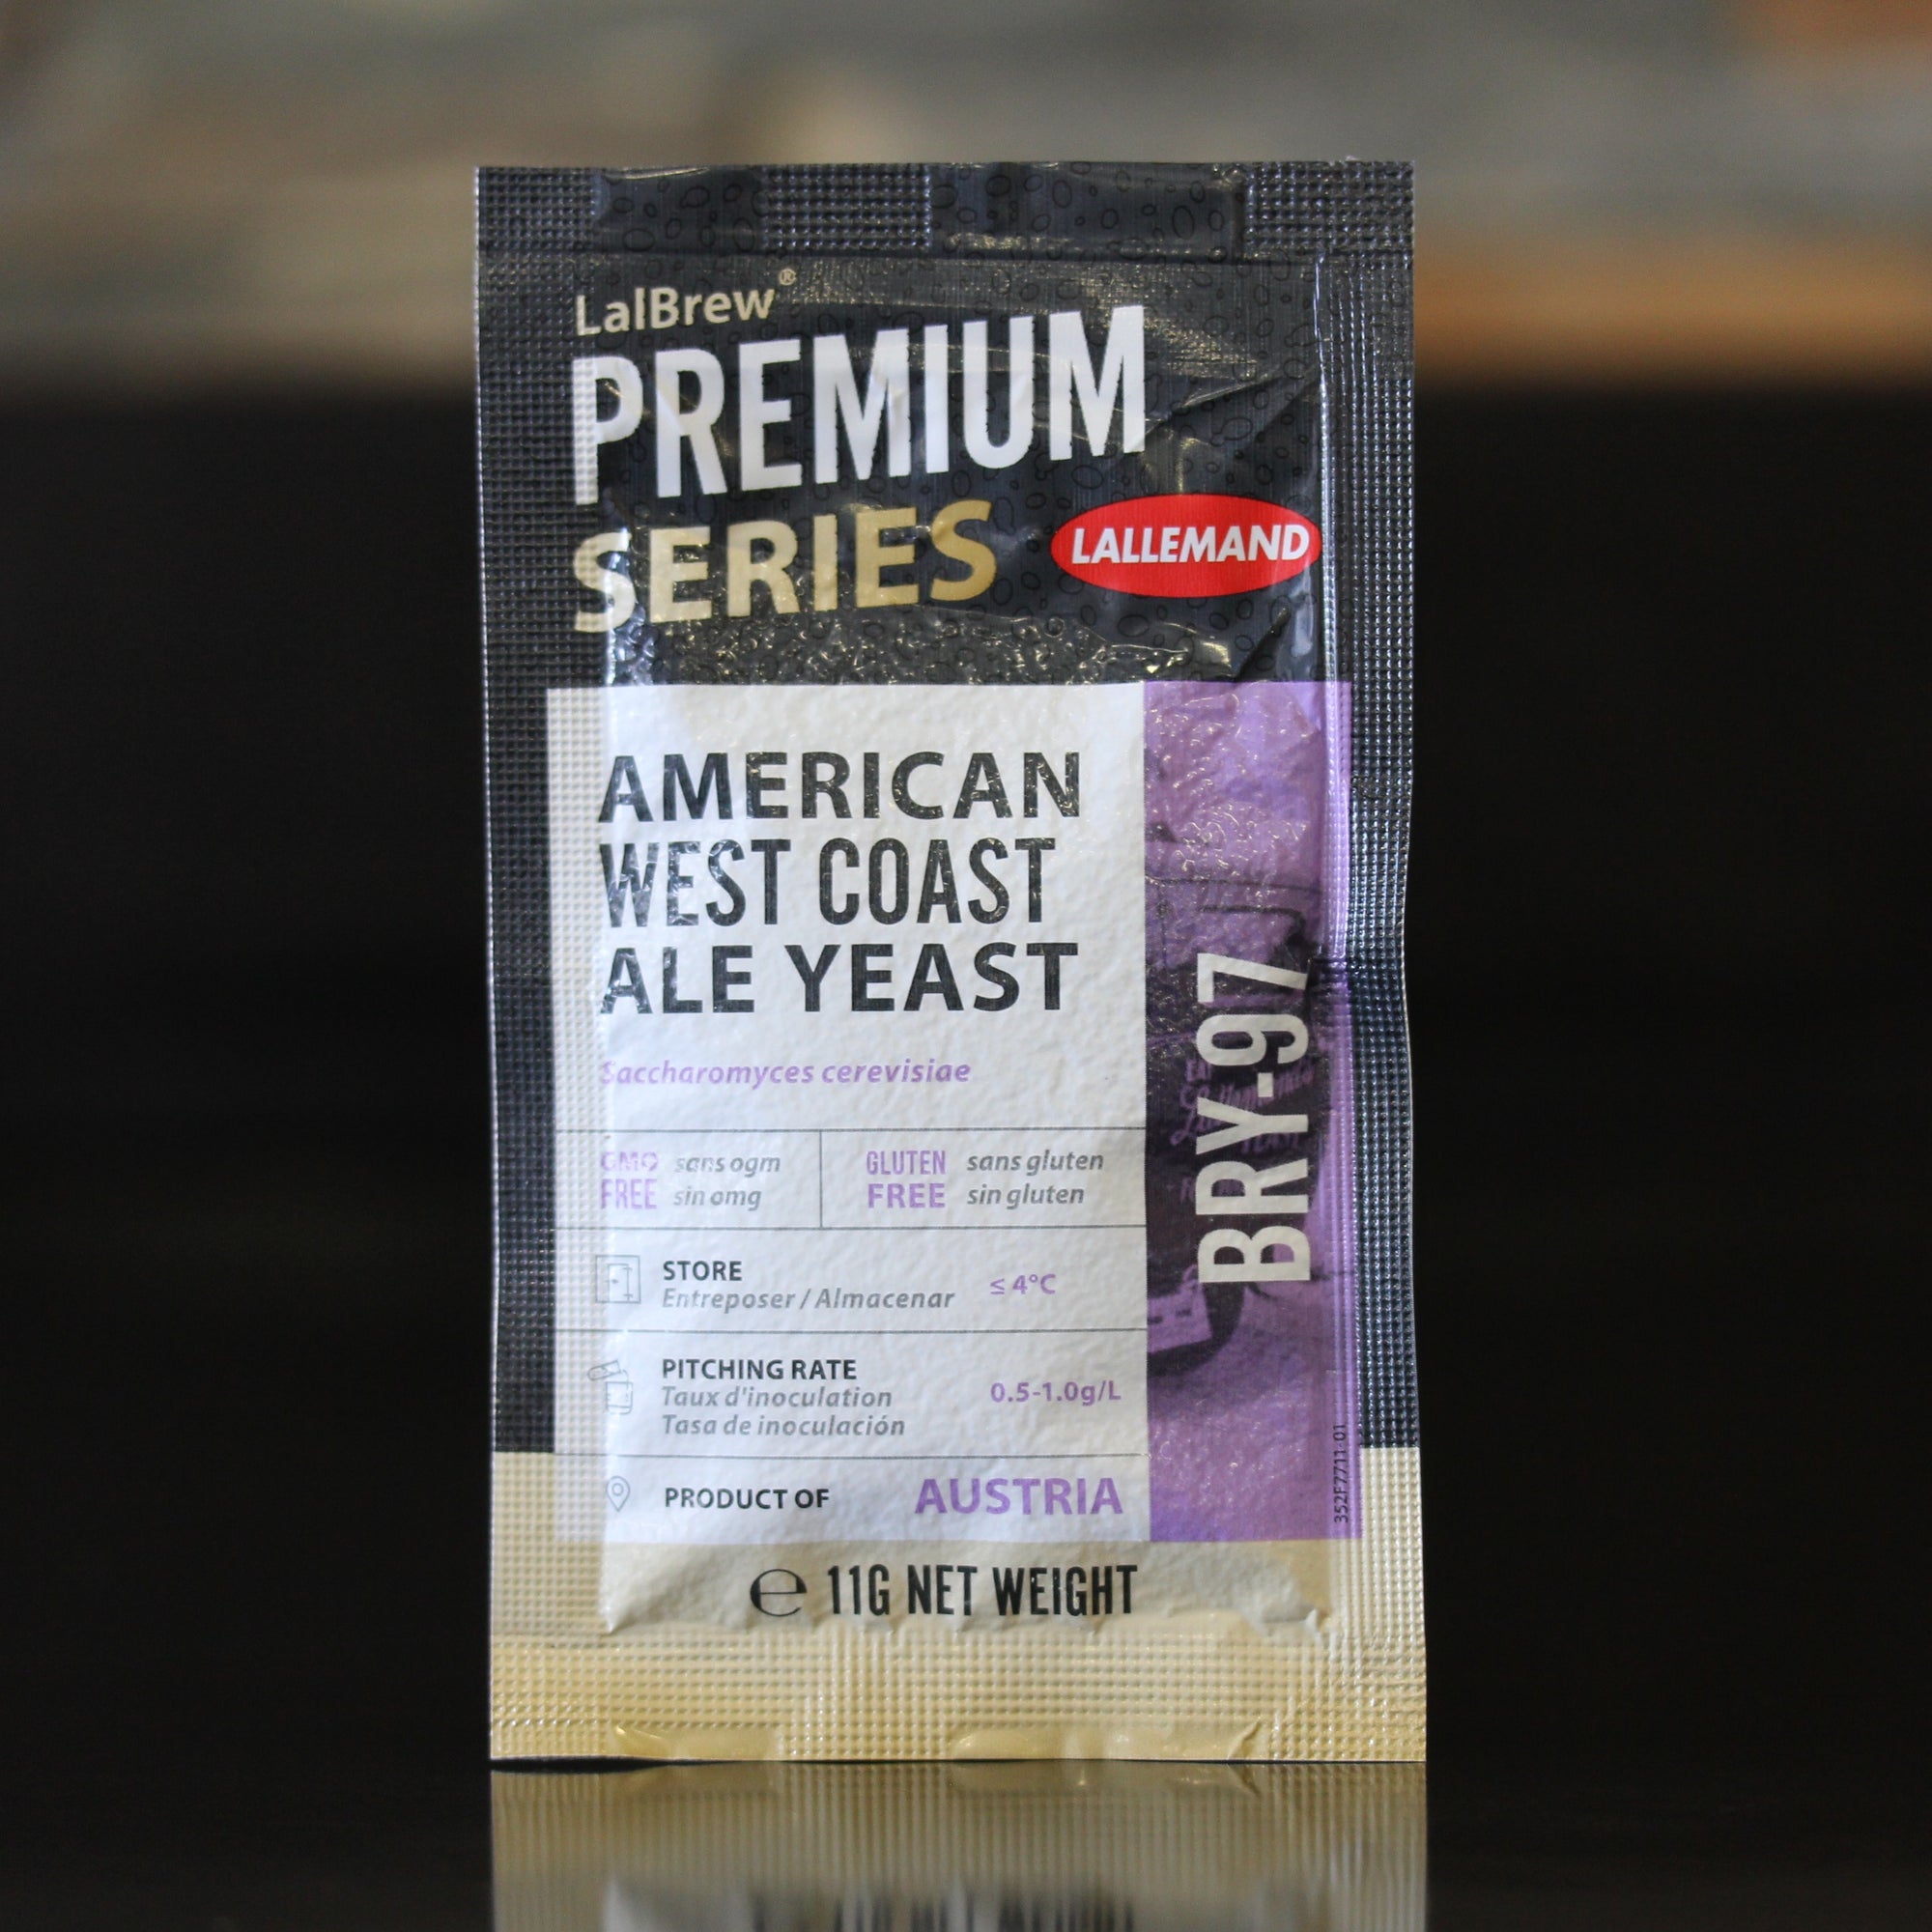 BRY-97 West Coast Ale Yeast